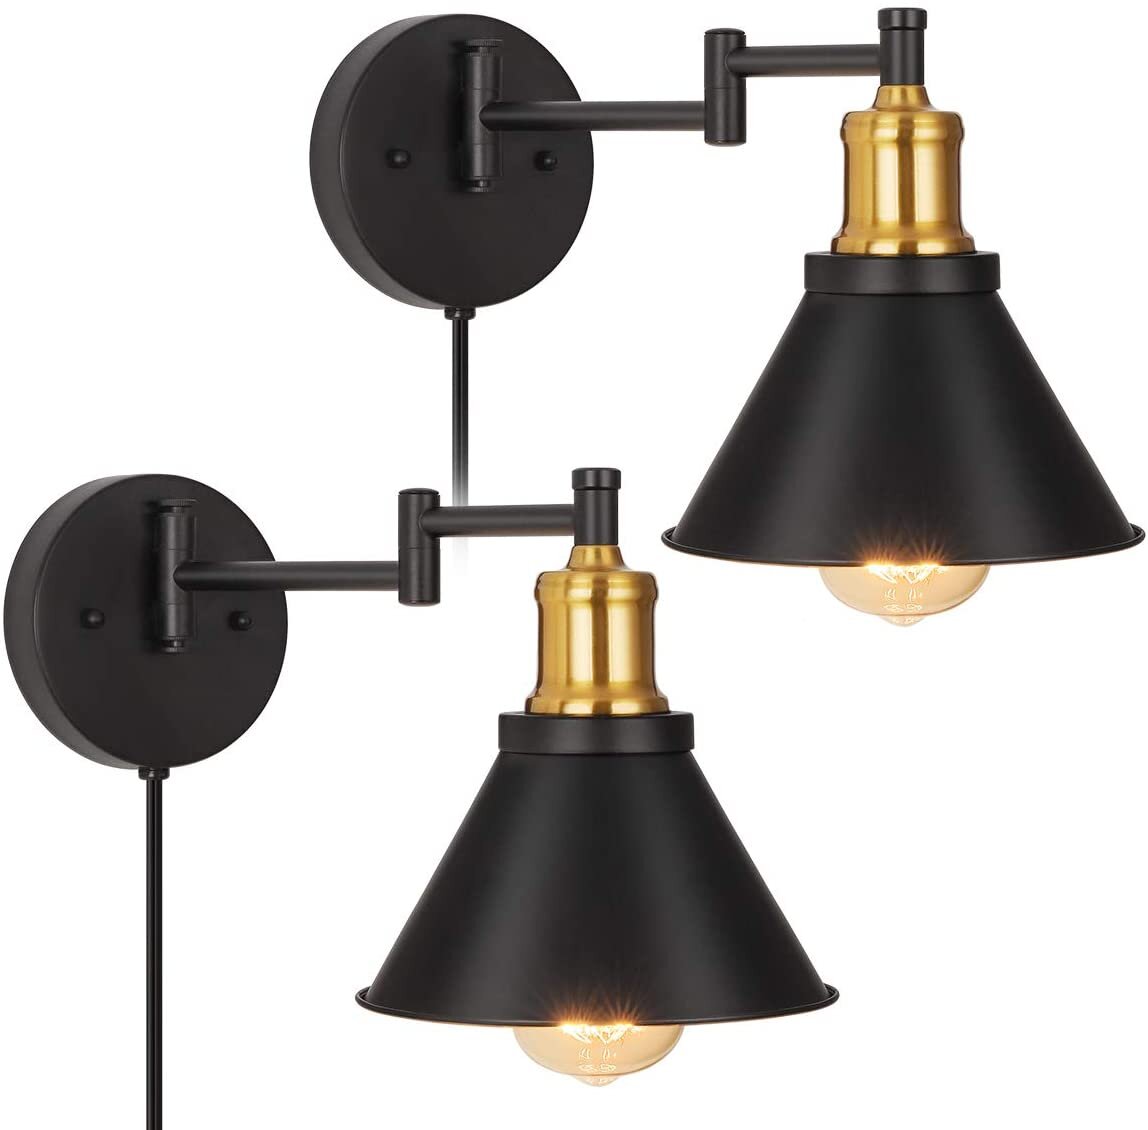 Set Of 2 Wall Light Metal Vintage Lamp Arm Swing Wall Lights Decoration Black 